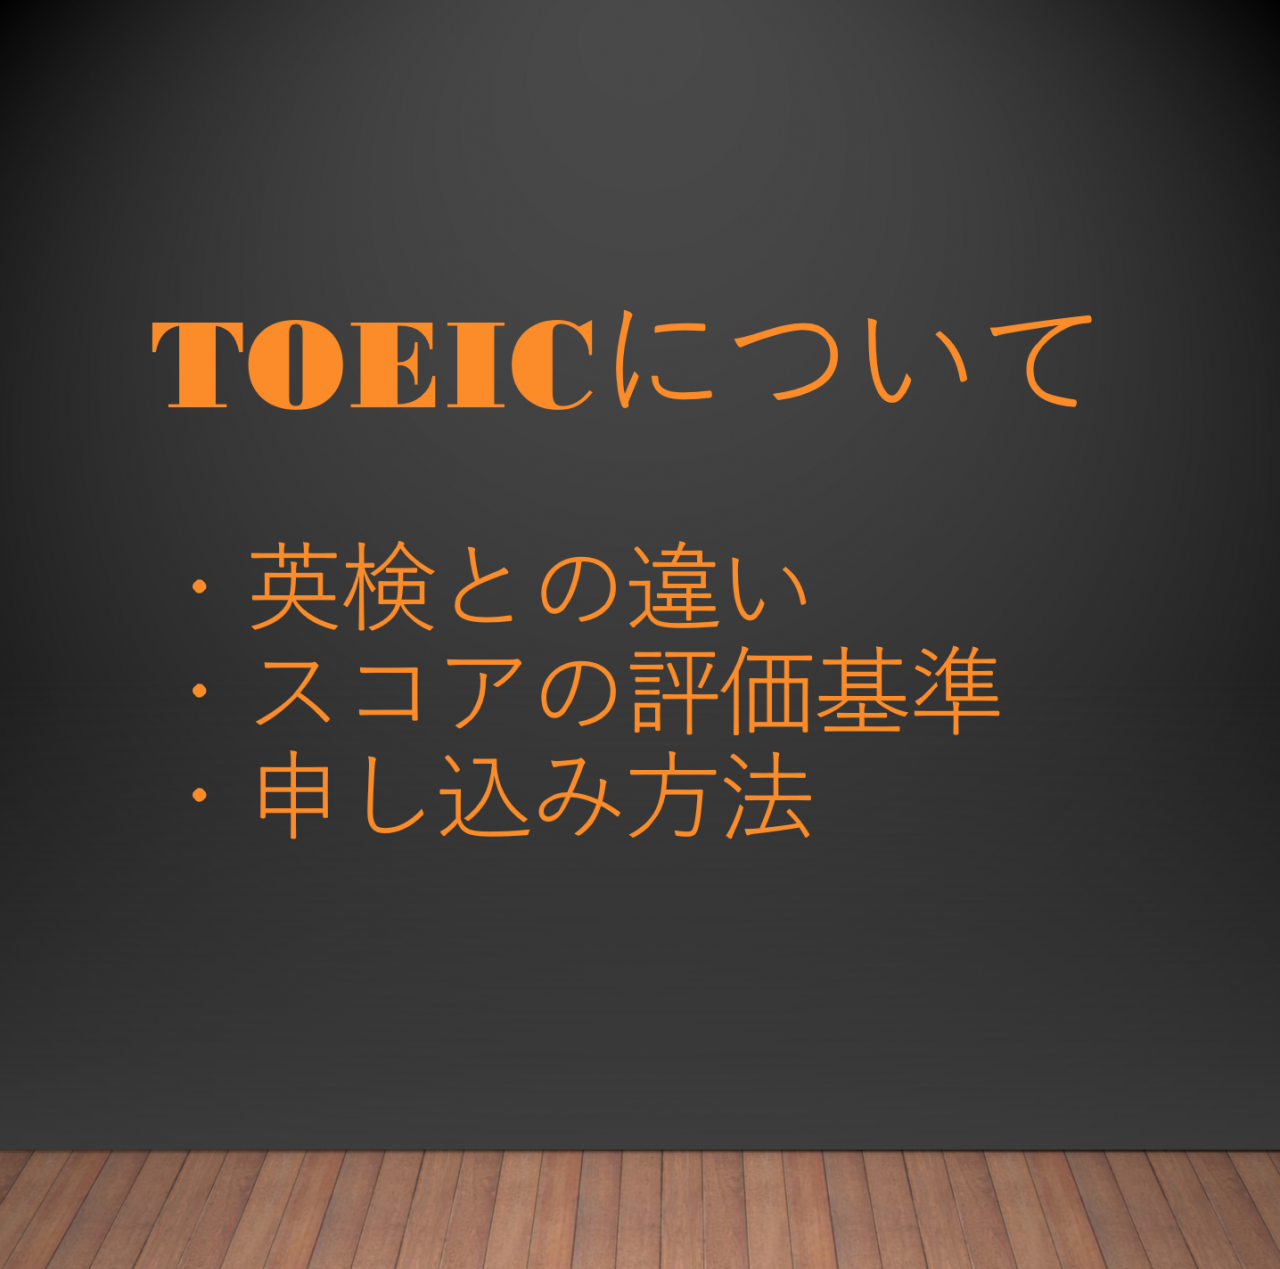 【TOEICについて】試験内容とスコアの基準・申し込み方法